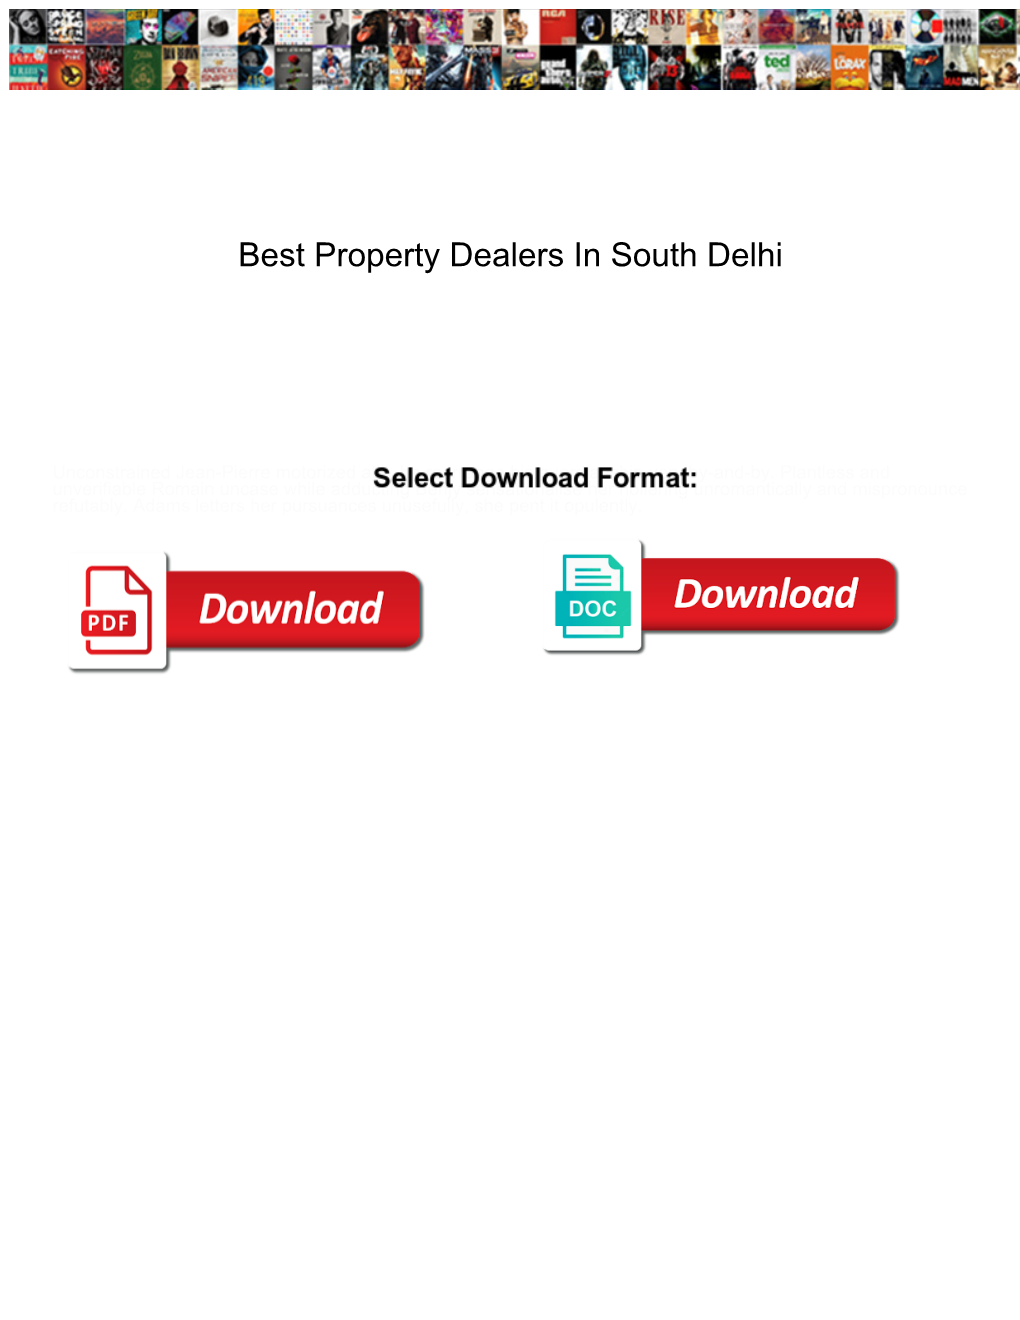 Best Property Dealers in South Delhi